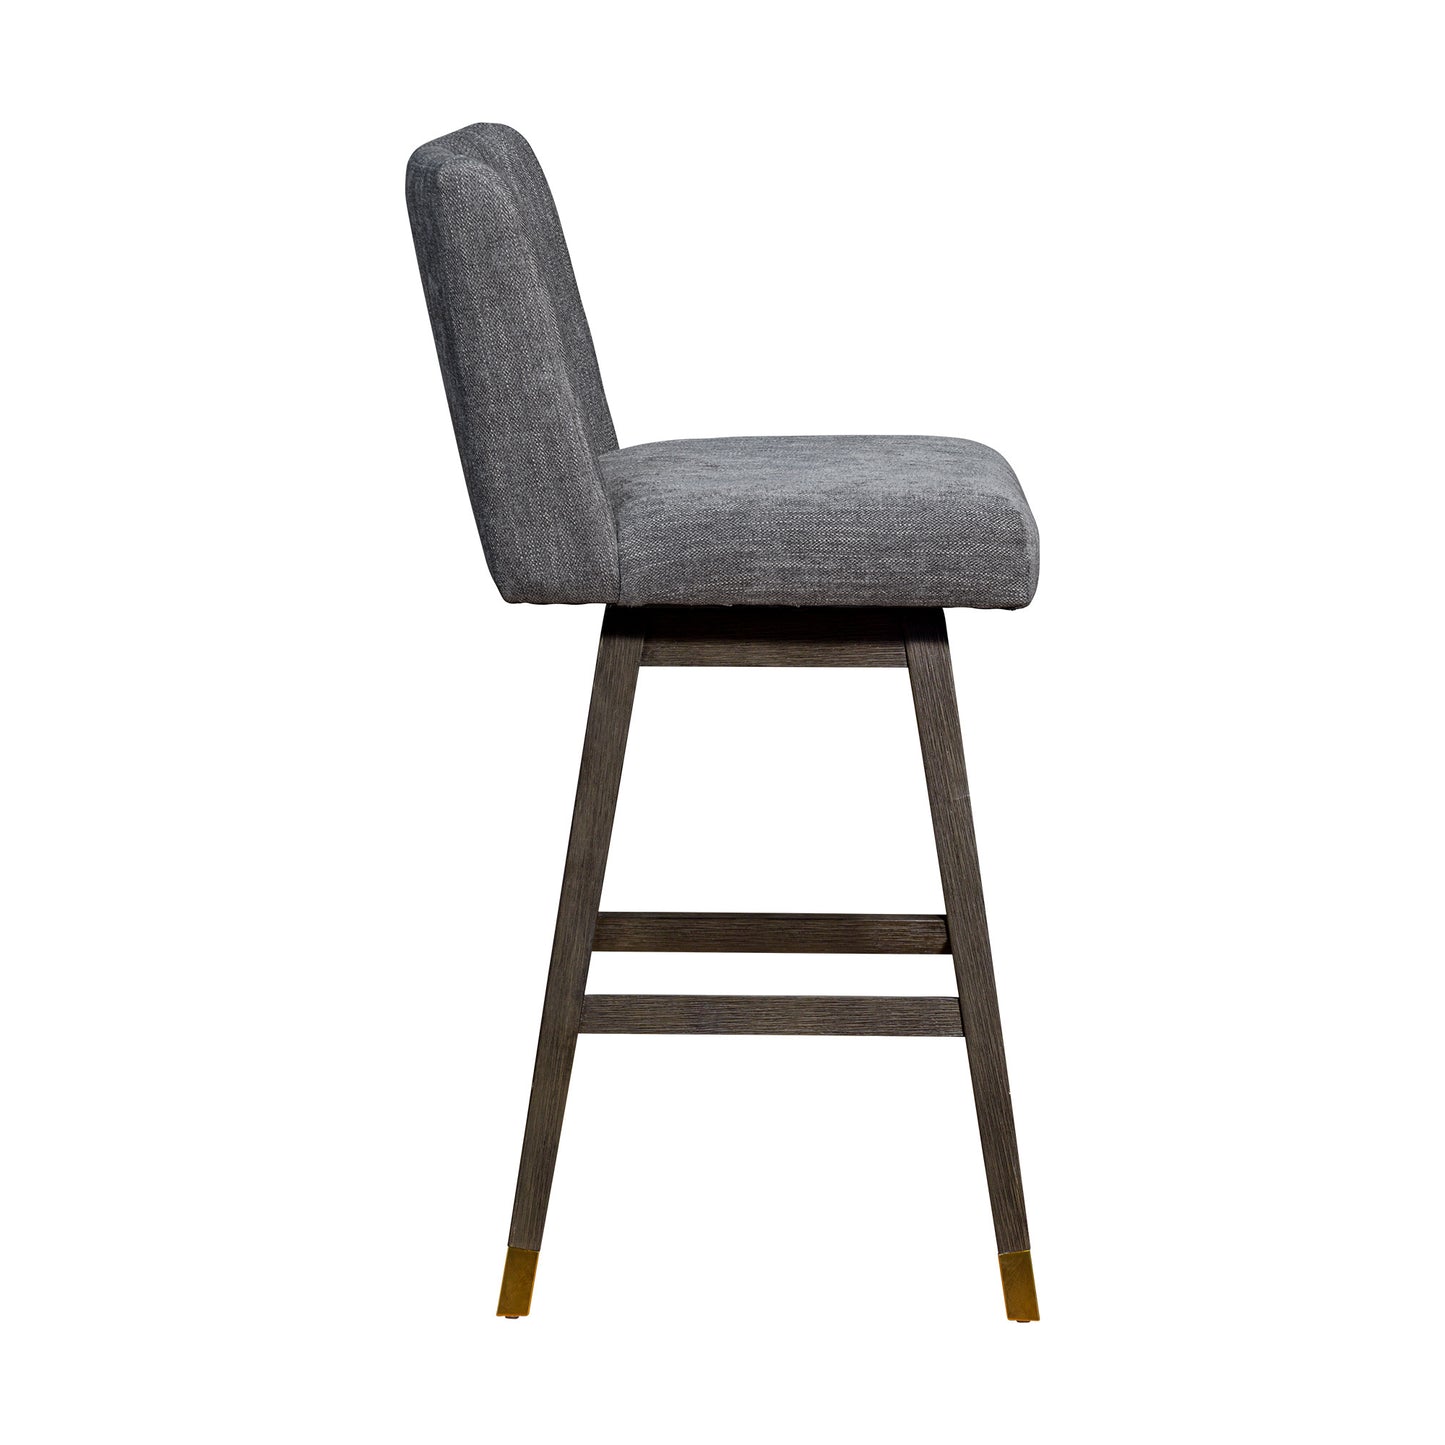 30" Solid Wood Swivel Bar Height Bar Chair